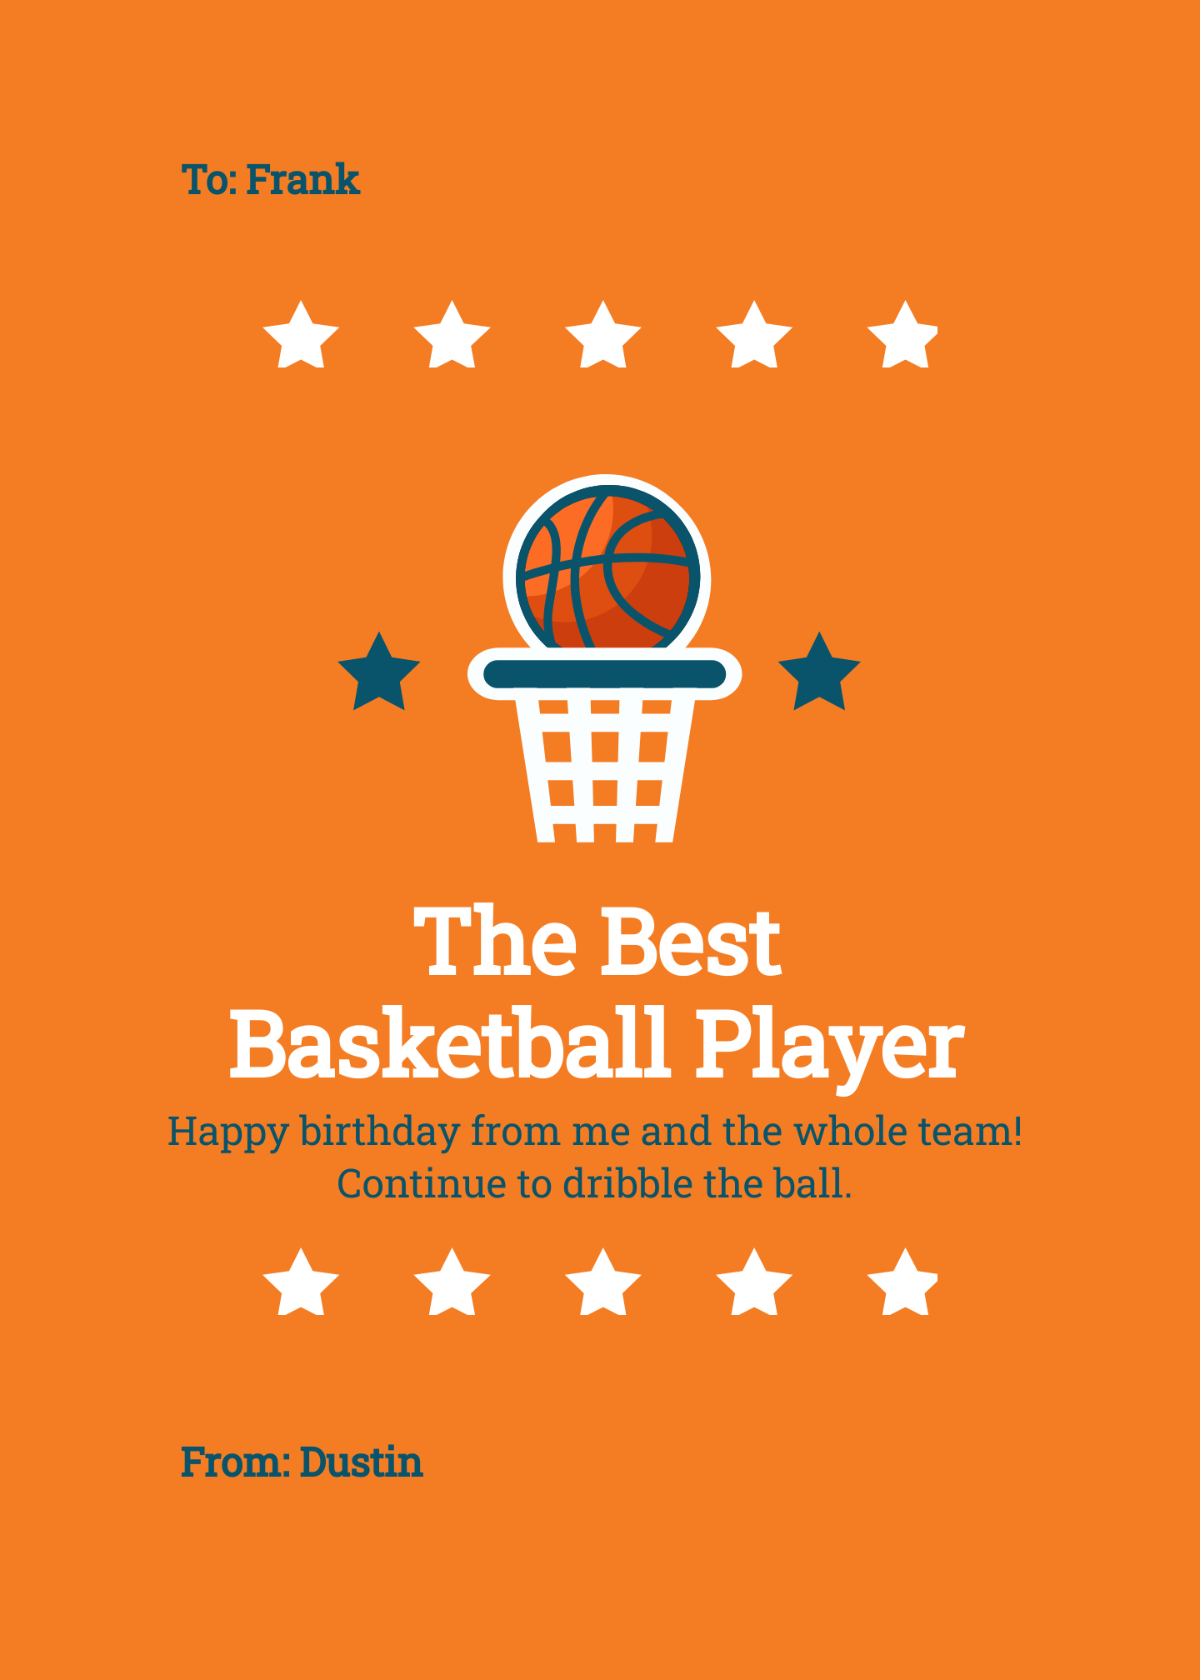 Basketball Birthday Card Template